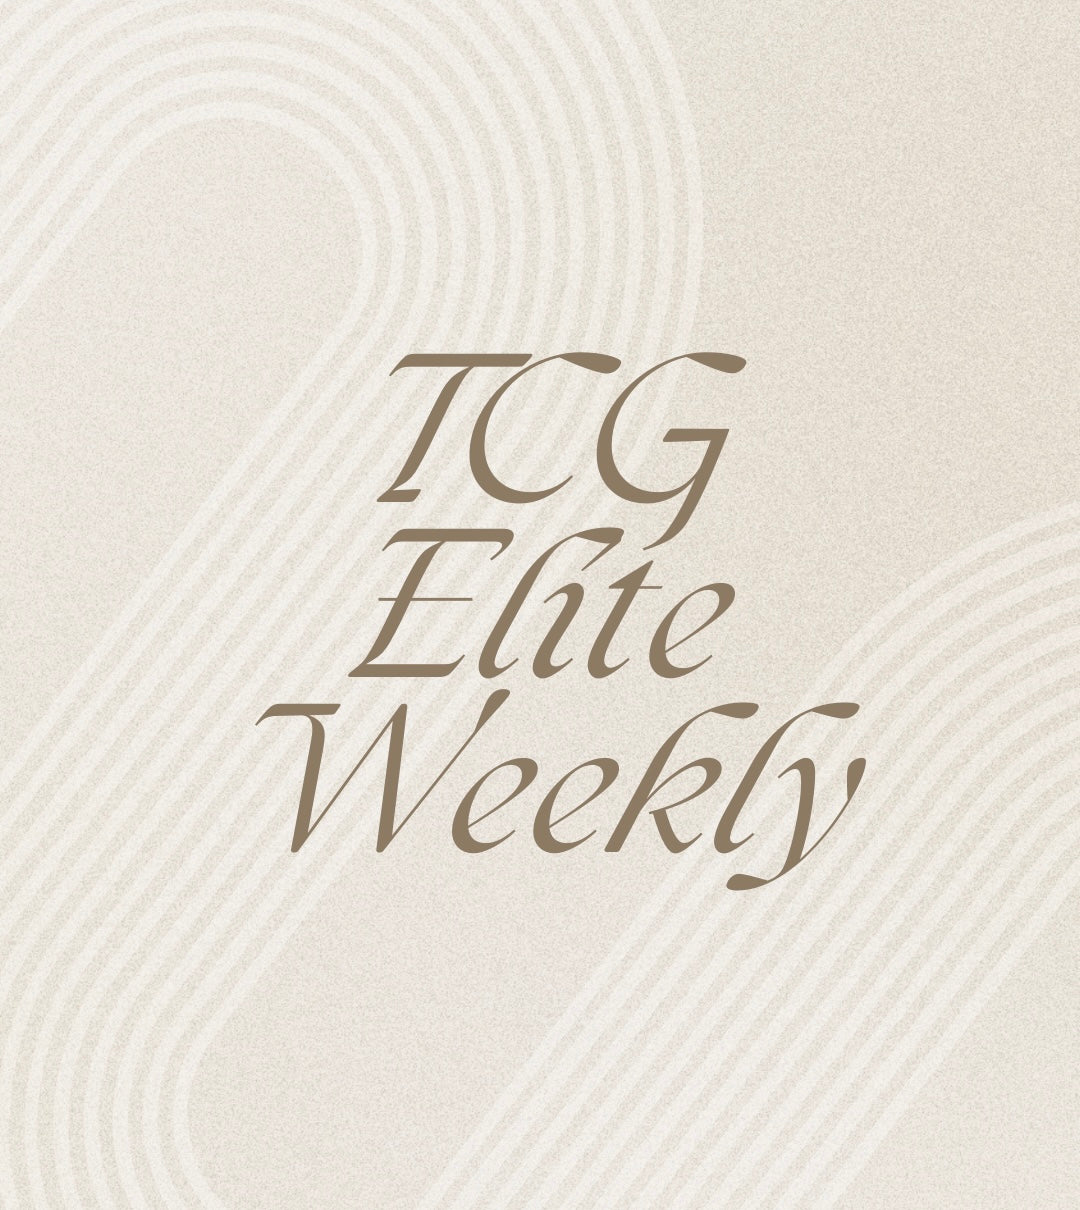 TCG Elite Weekly